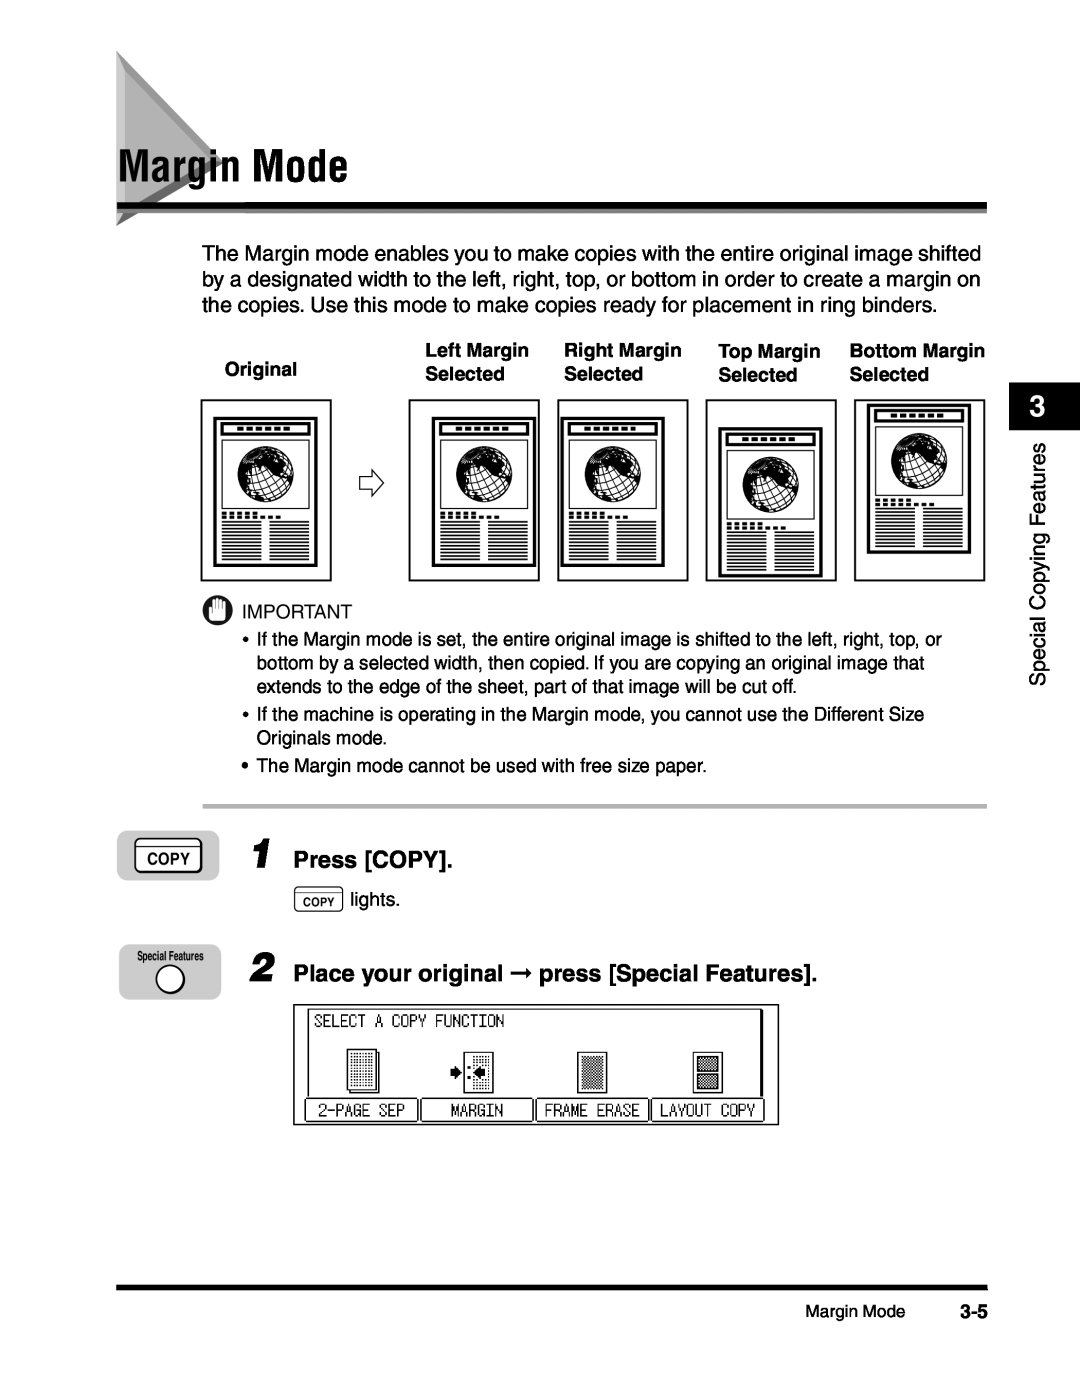 Canon 2010F manual Margin Mode, Place your original press Special Features, Press COPY 